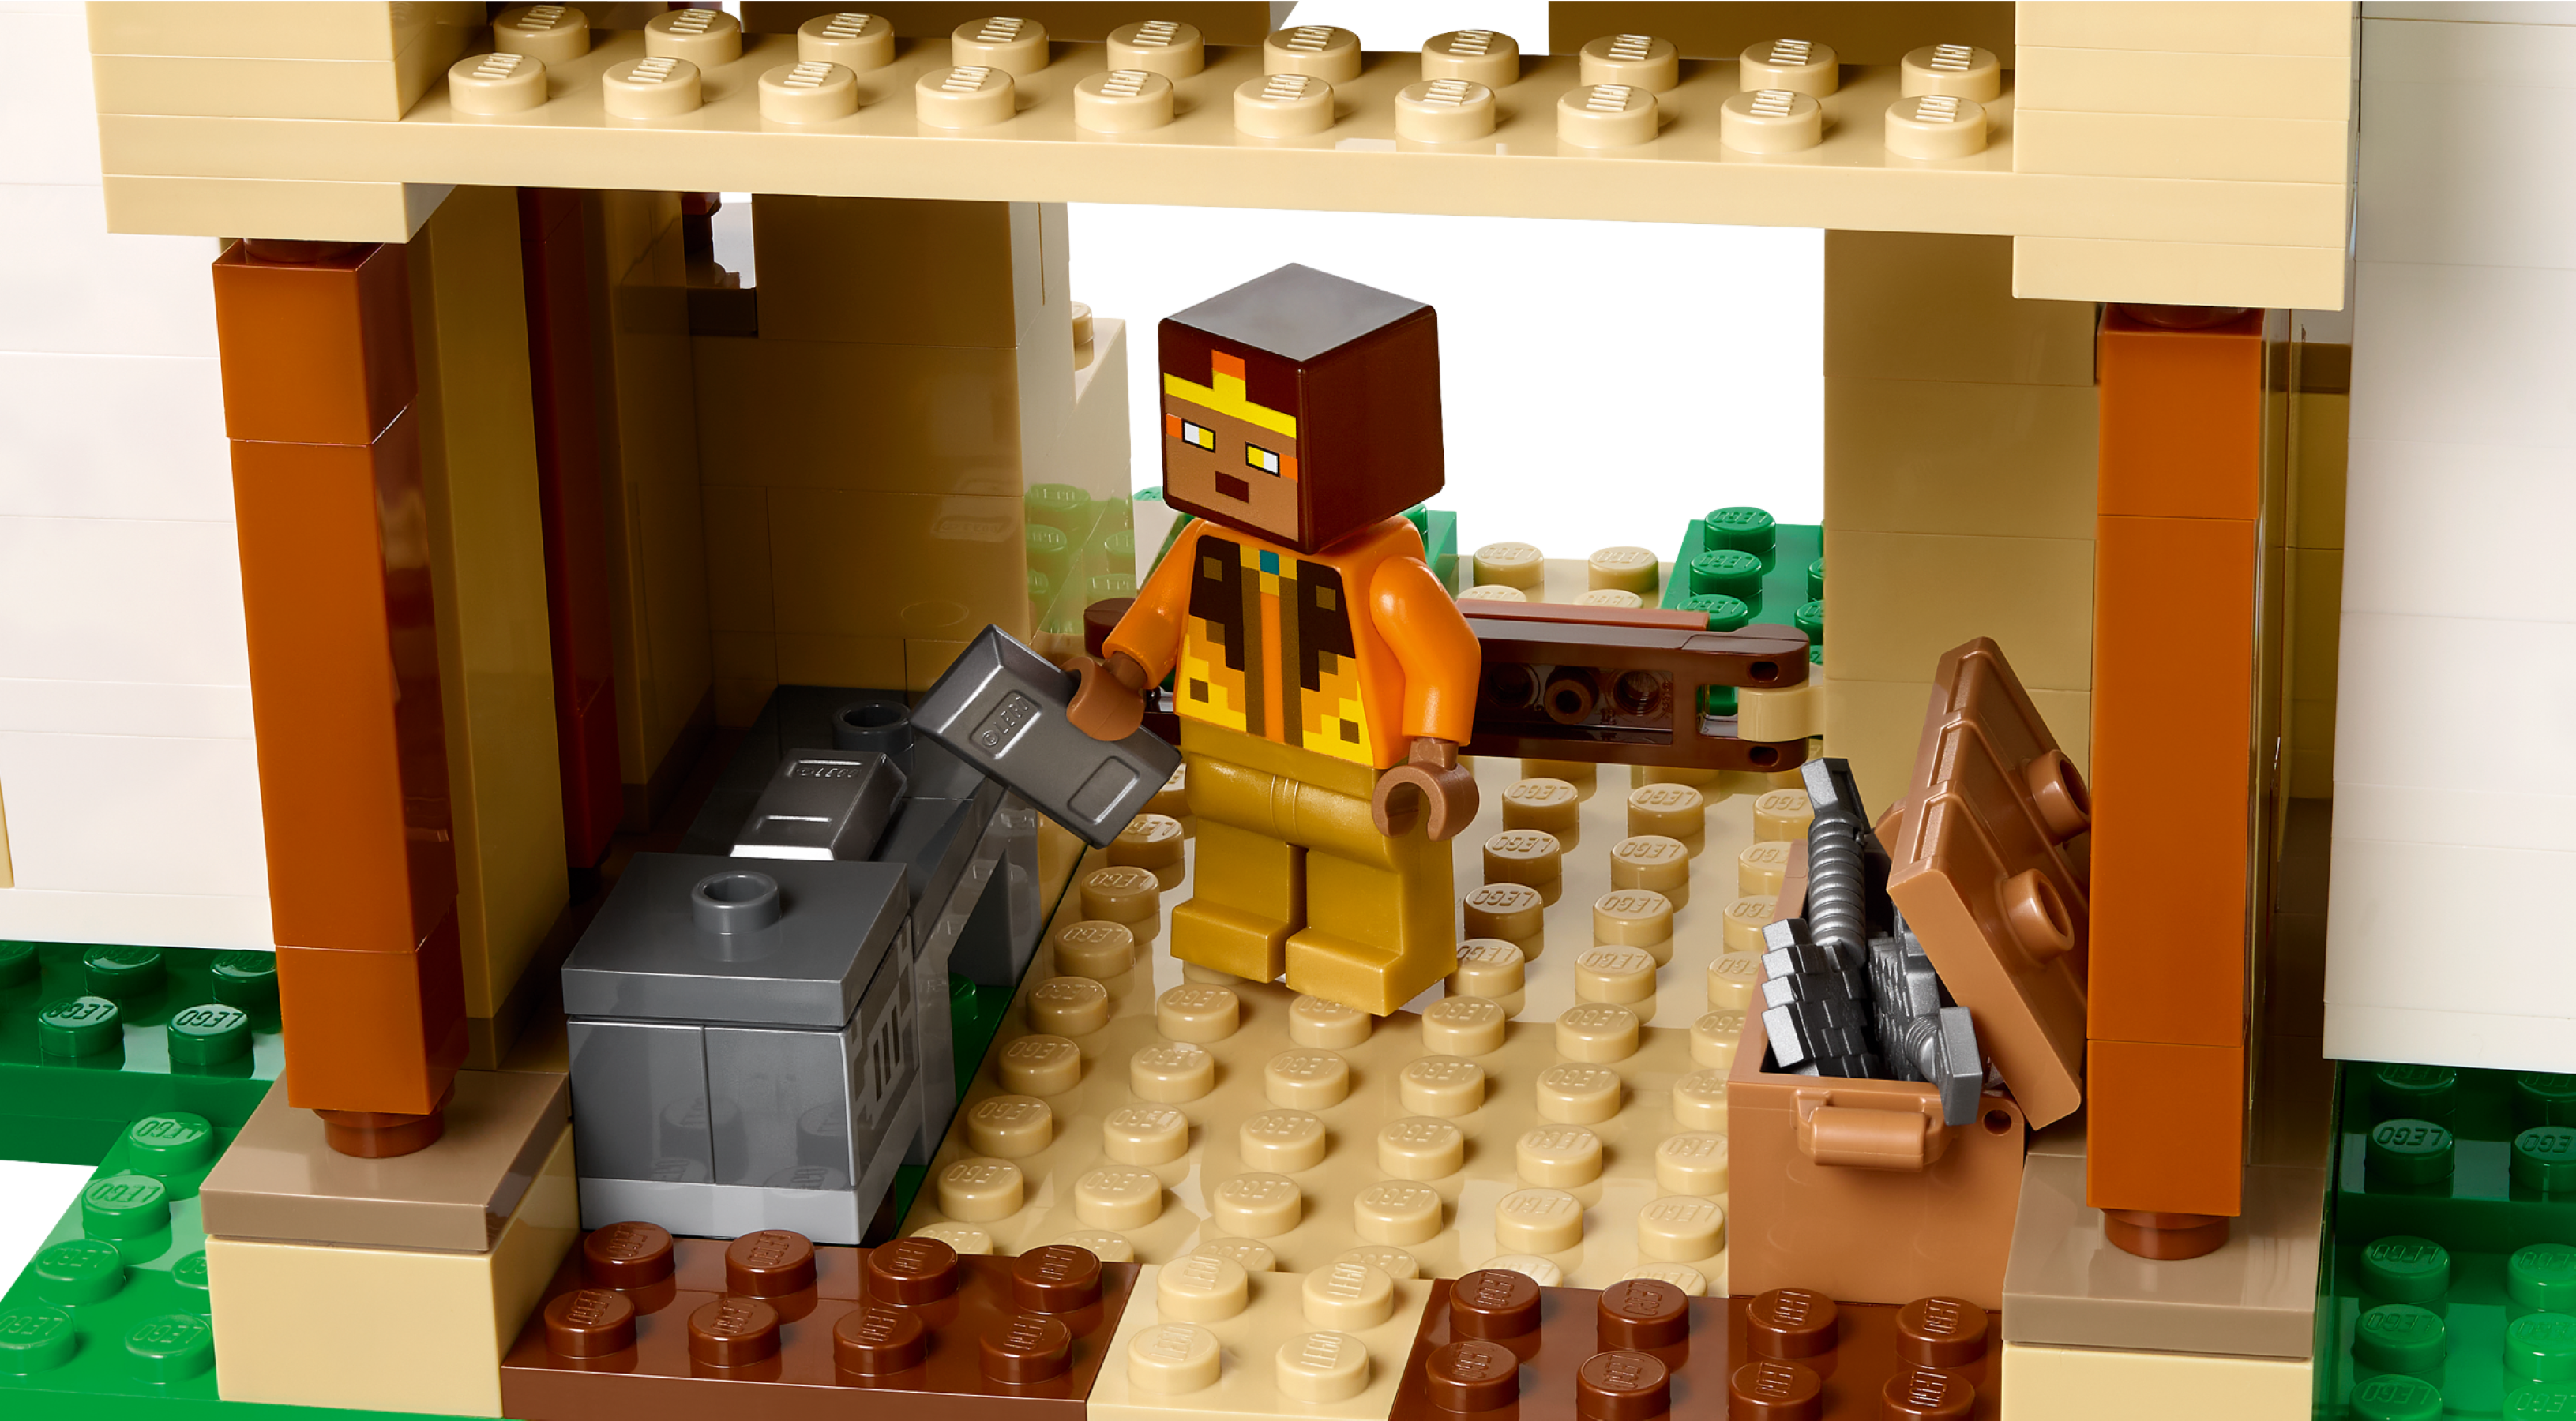 LEGO Minecraft 21250 - la Forteresse du Golem de fer